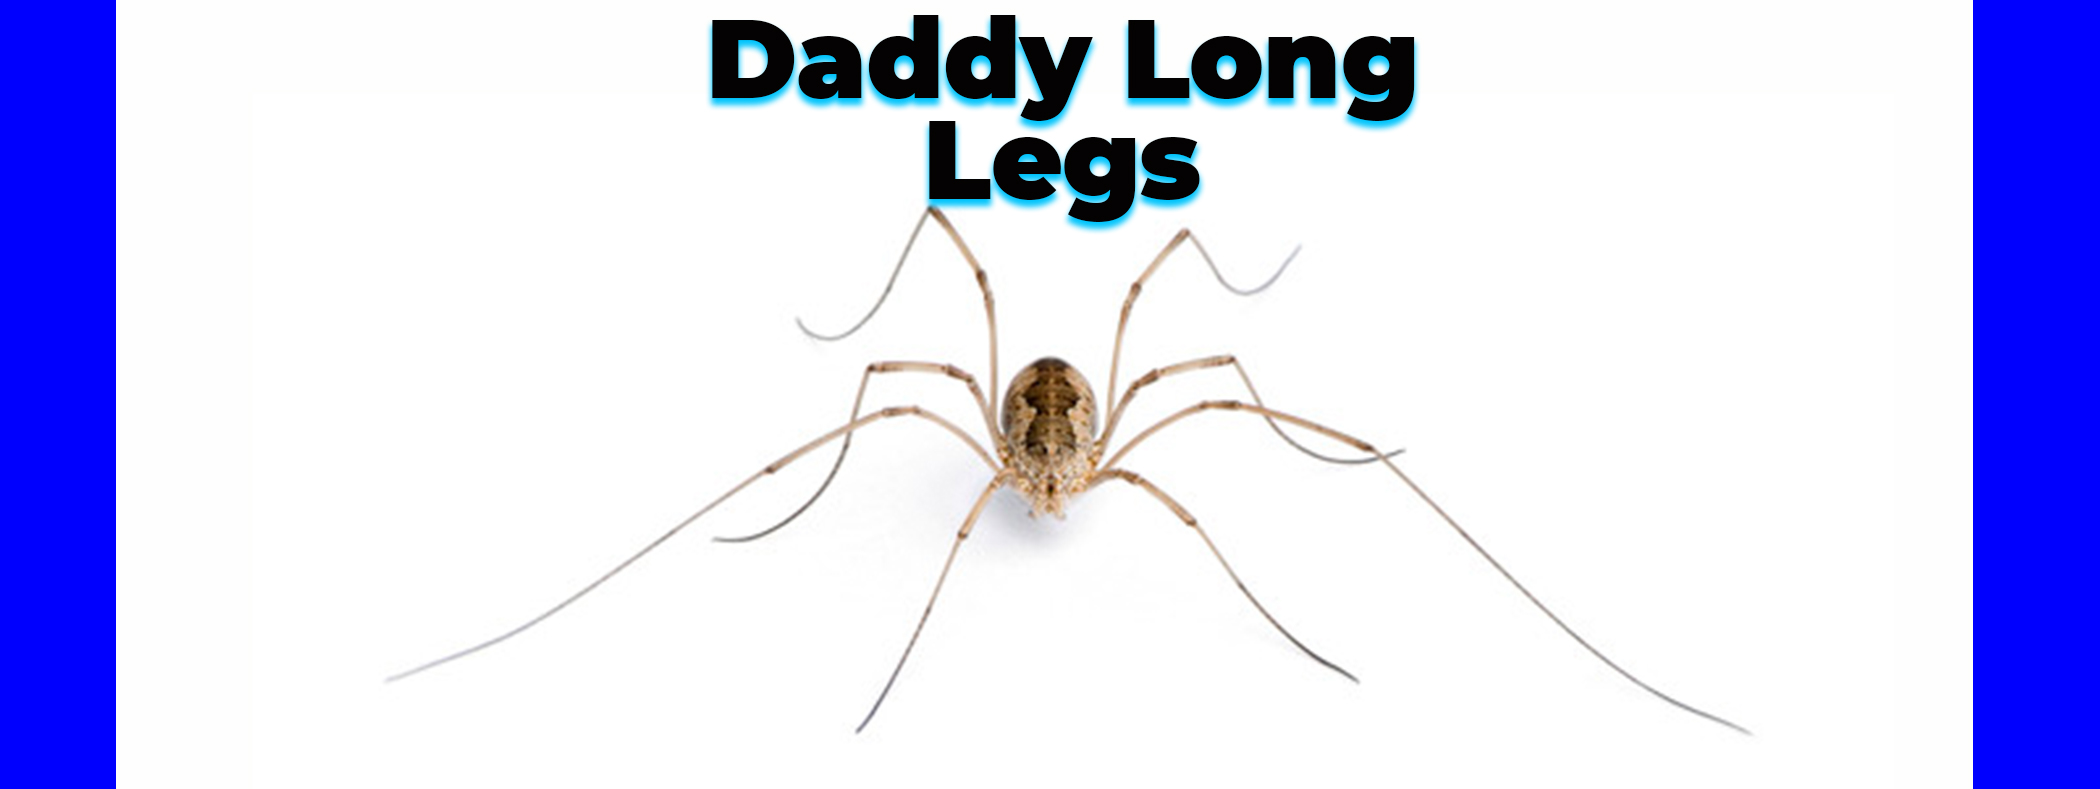 Long Legs, Daddy